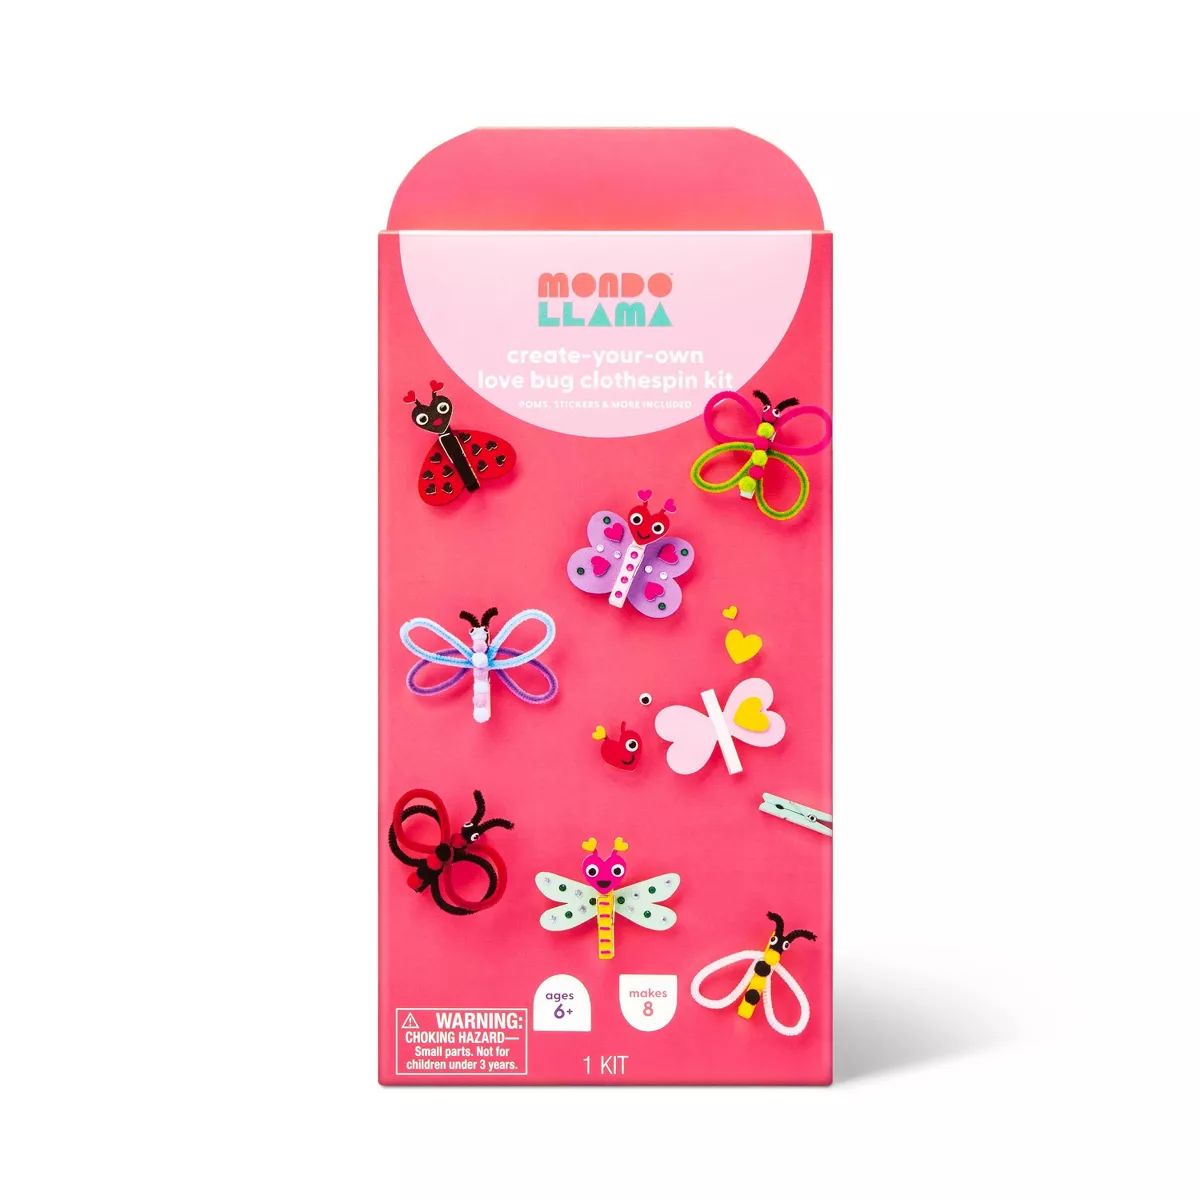 Create-Your-Own Love Bug Clothespin Valentine's Day Art Kit - Mondo Llama™ | Target